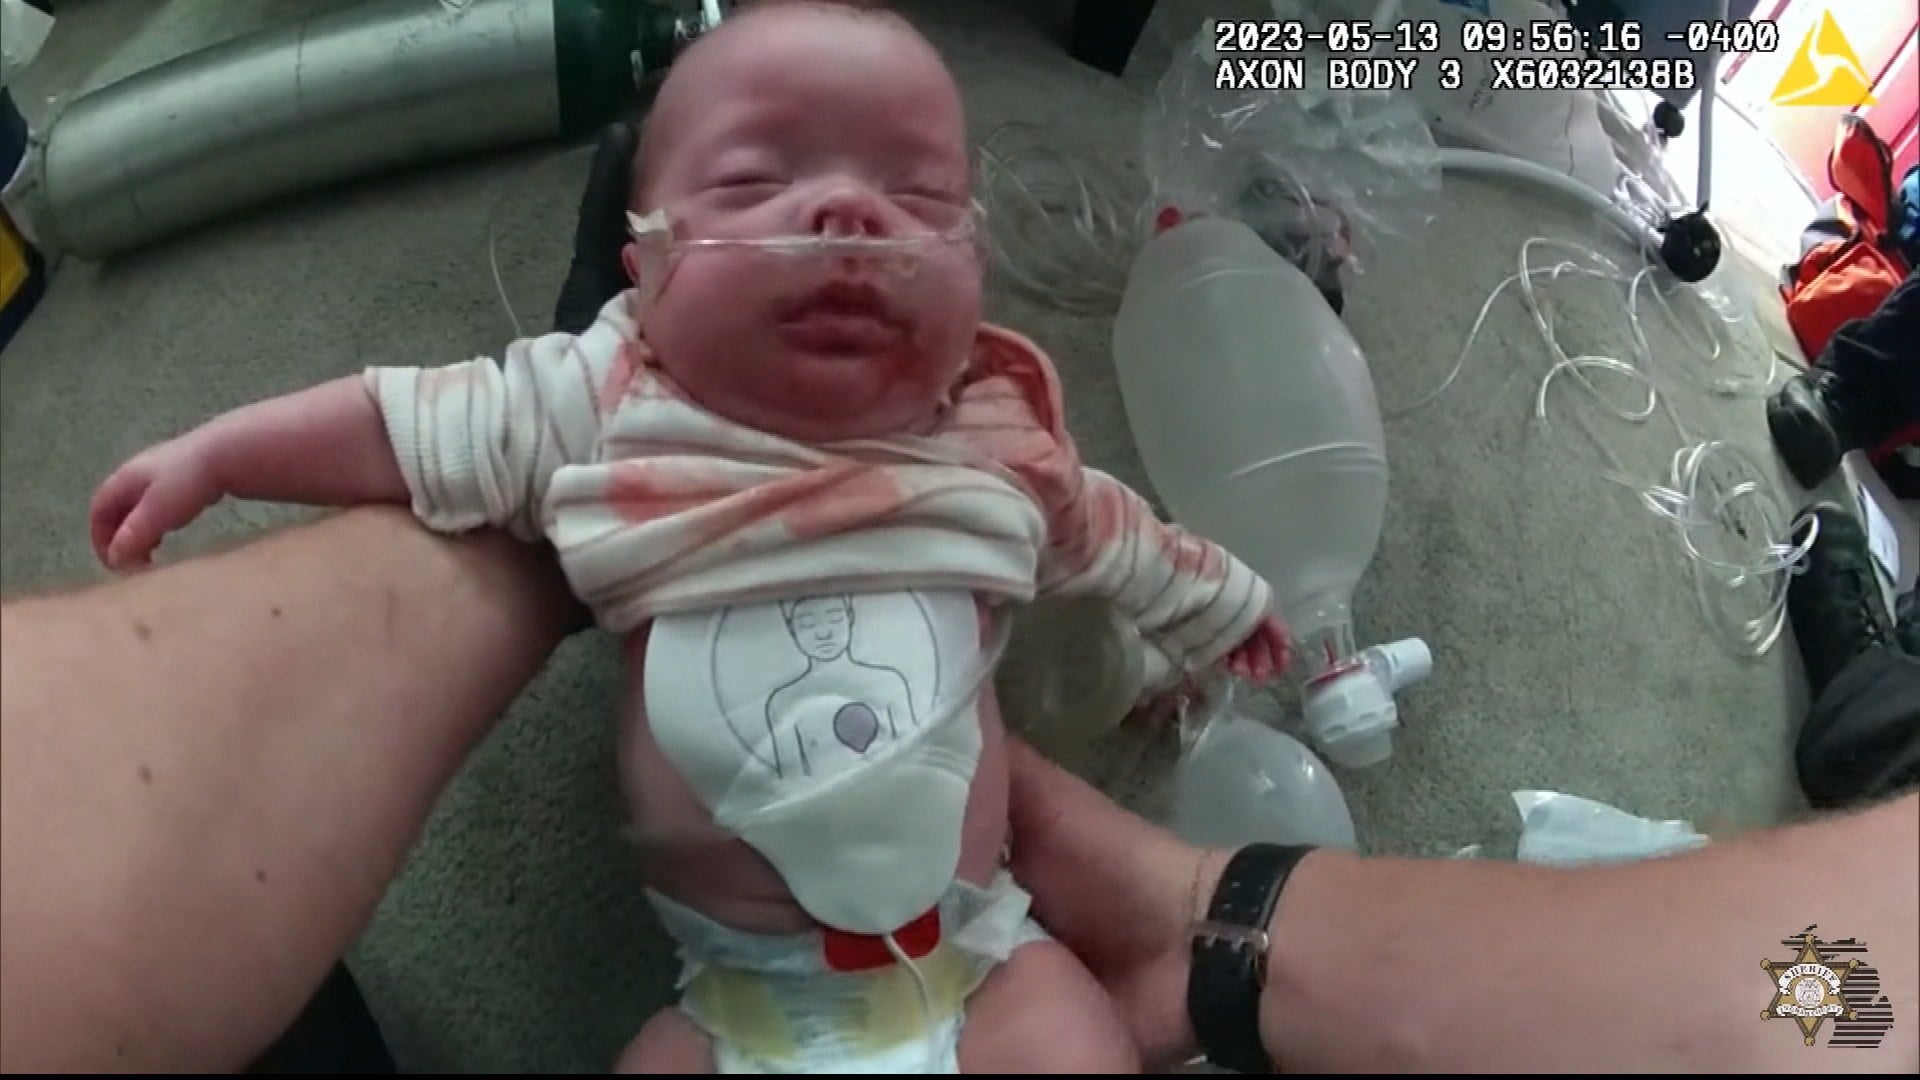 Infant CPRWrap™ Aid, Ages 12 Mos. & Under